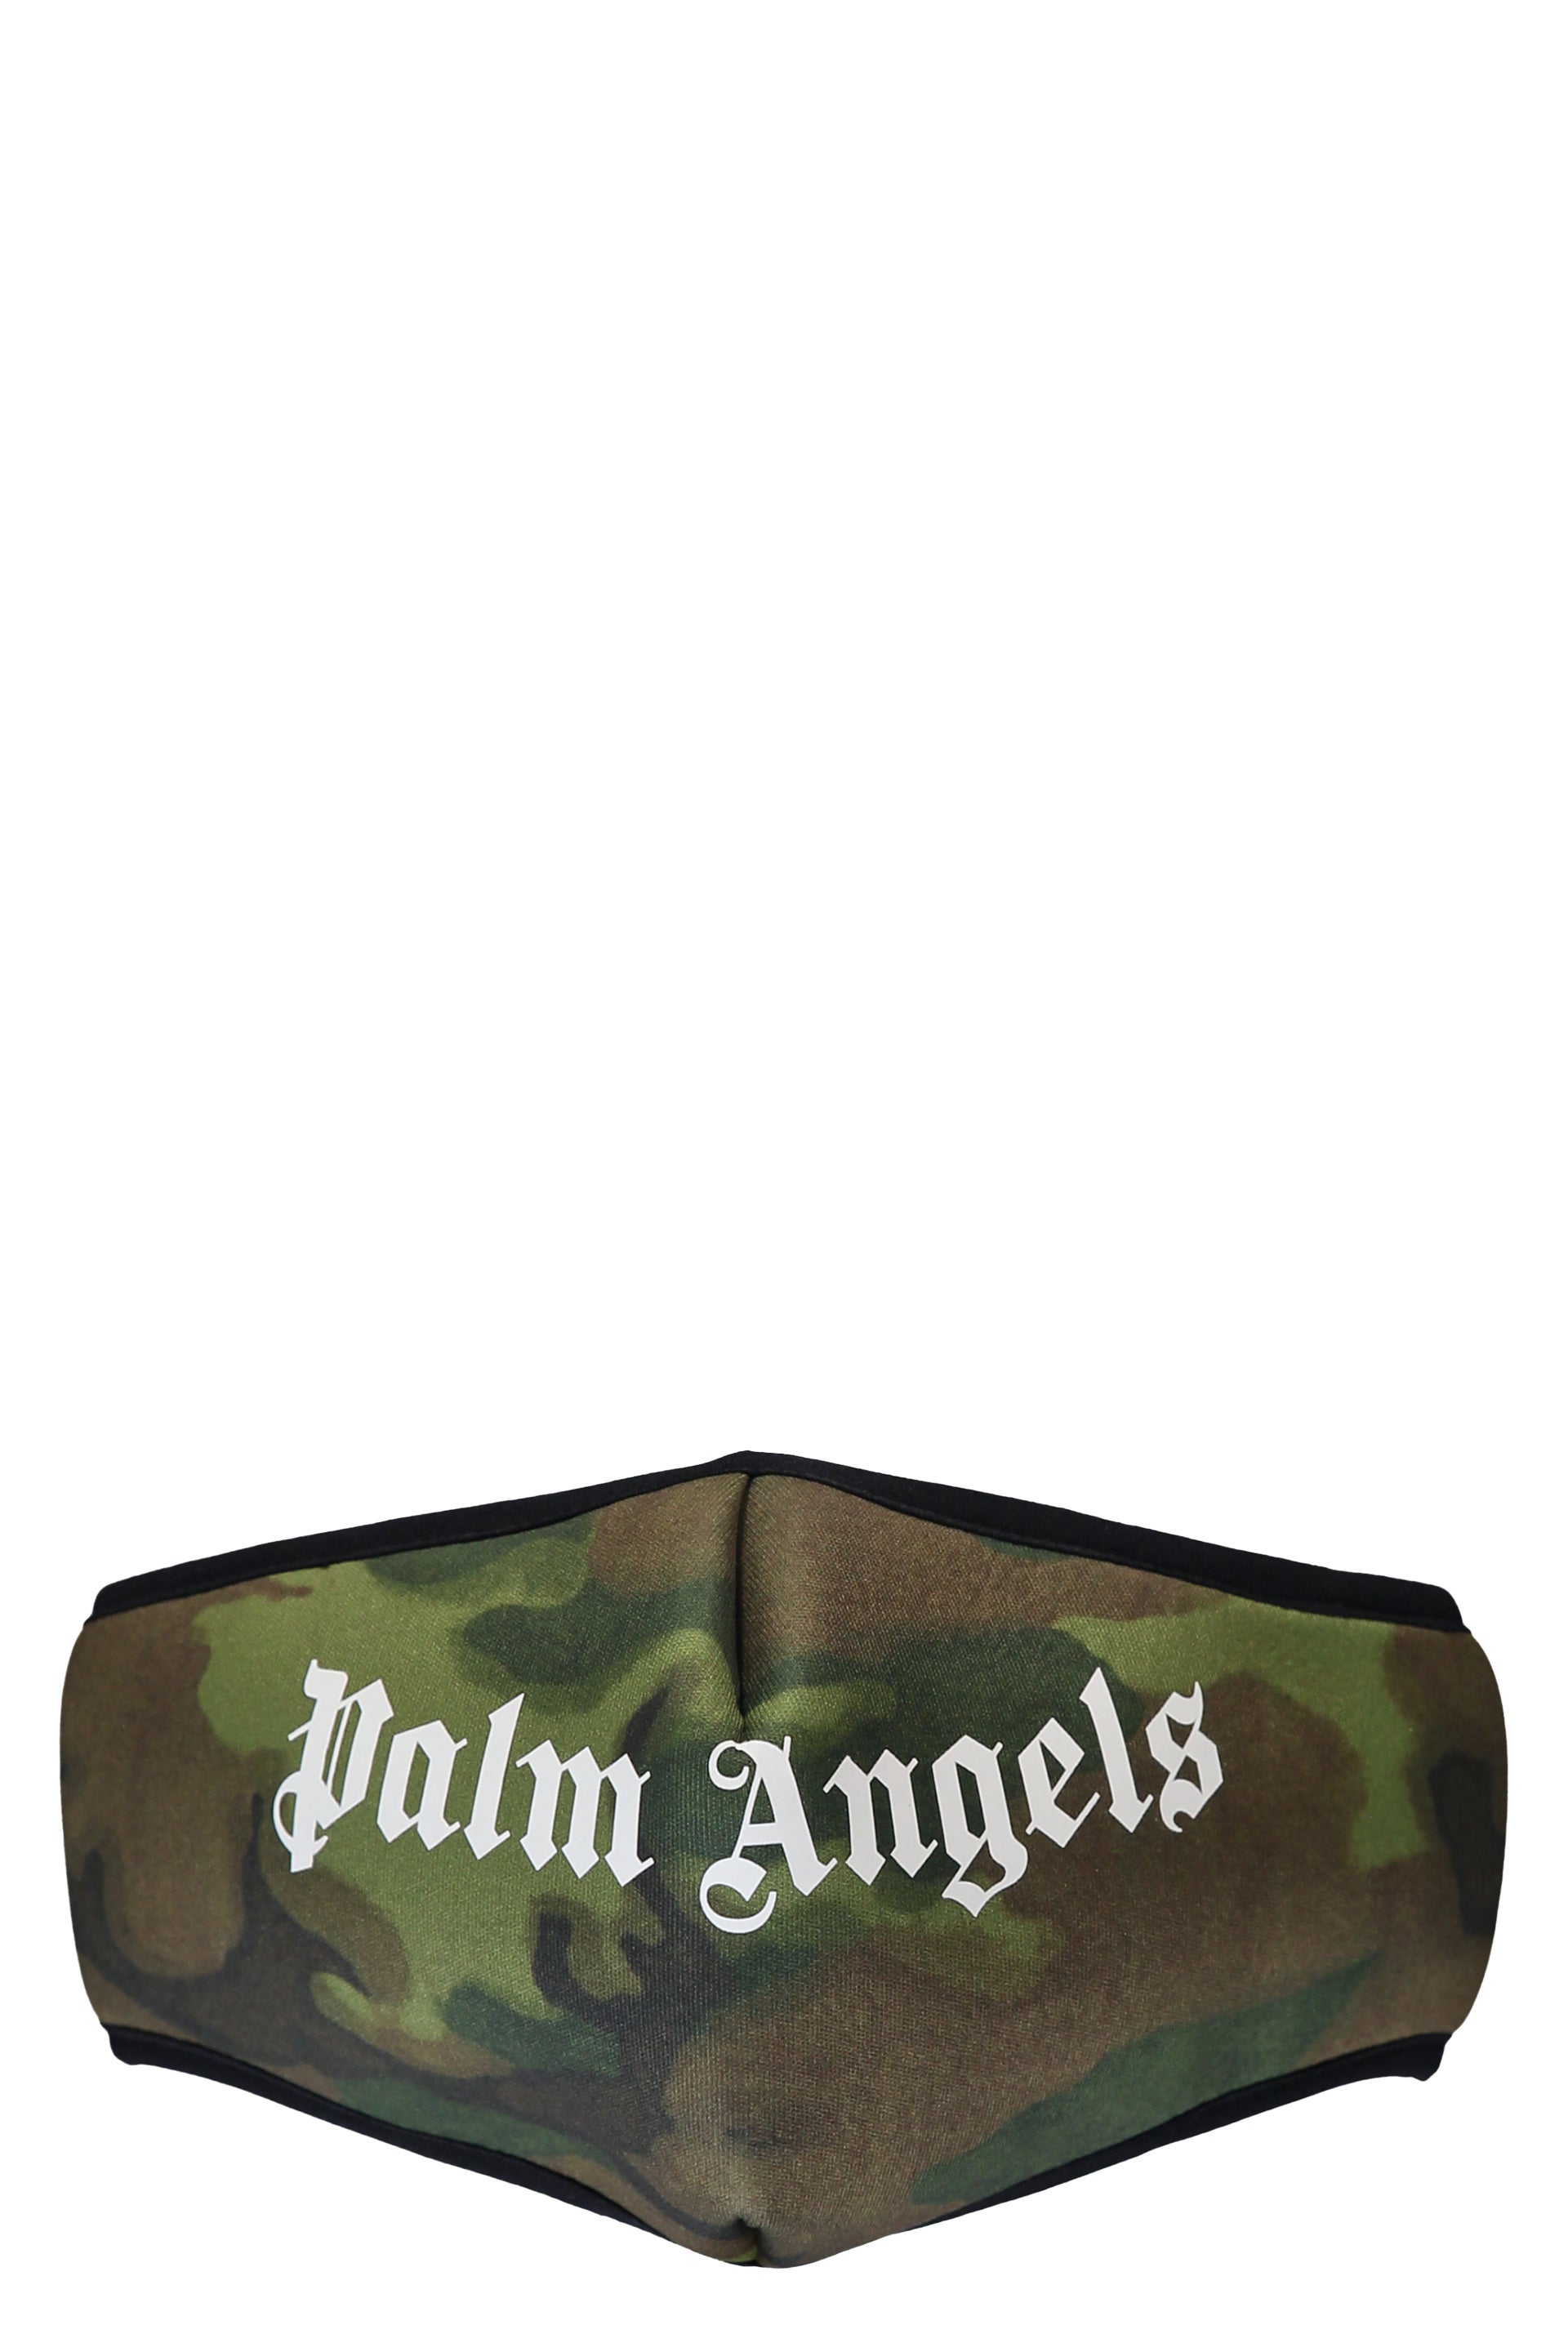 Palm-Angels-OUTLET-SALE-Mask-with-logo-Accessoires-TU-ARCHIVE-COLLECTION_b979017a-c203-4da3-83f7-817d050384a4.jpg